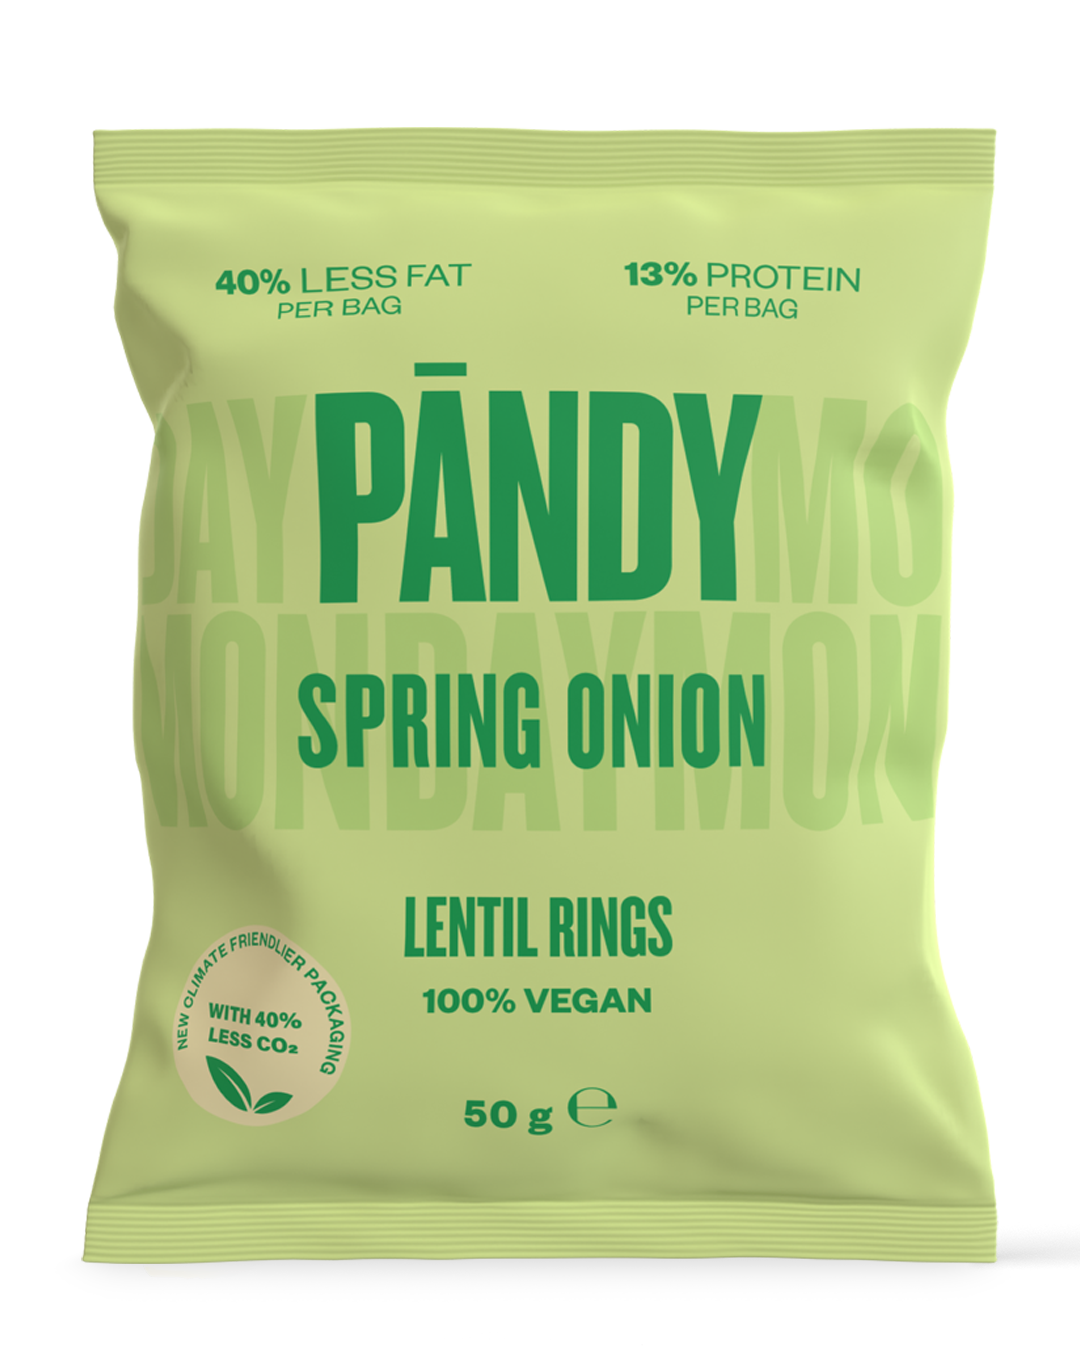 Pändy Lentil Rings Spring Onion